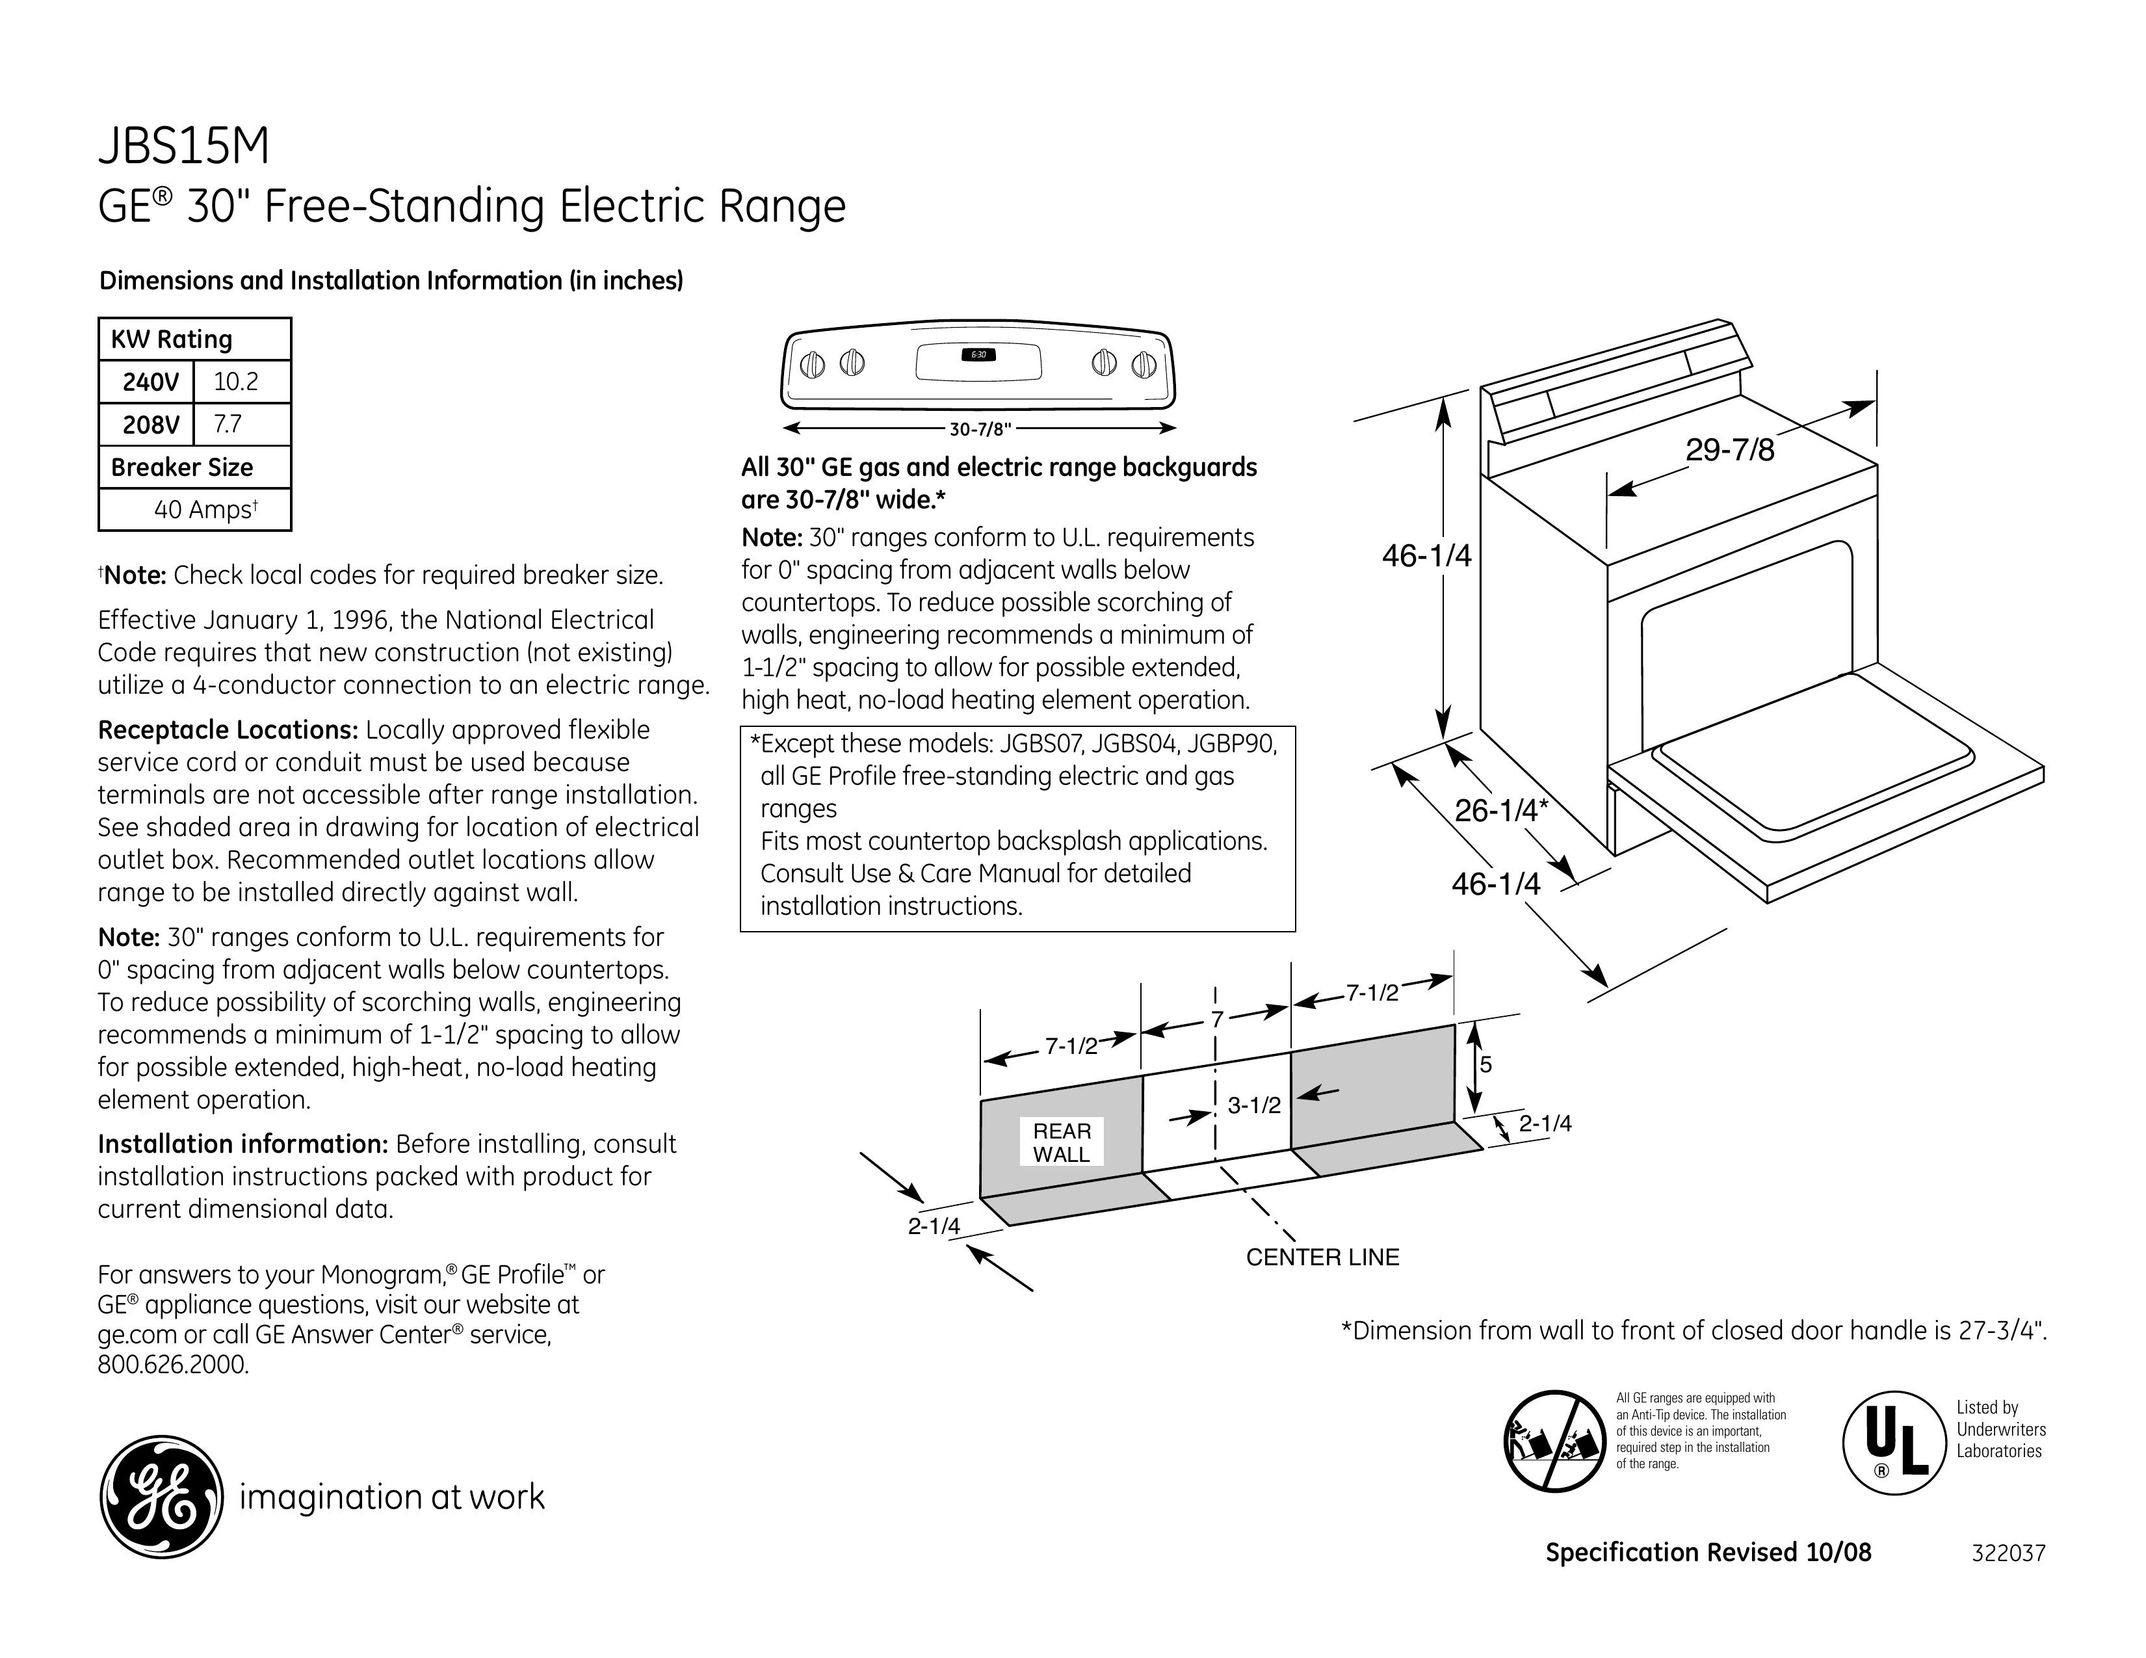 GE JBS15M Water Heater User Manual